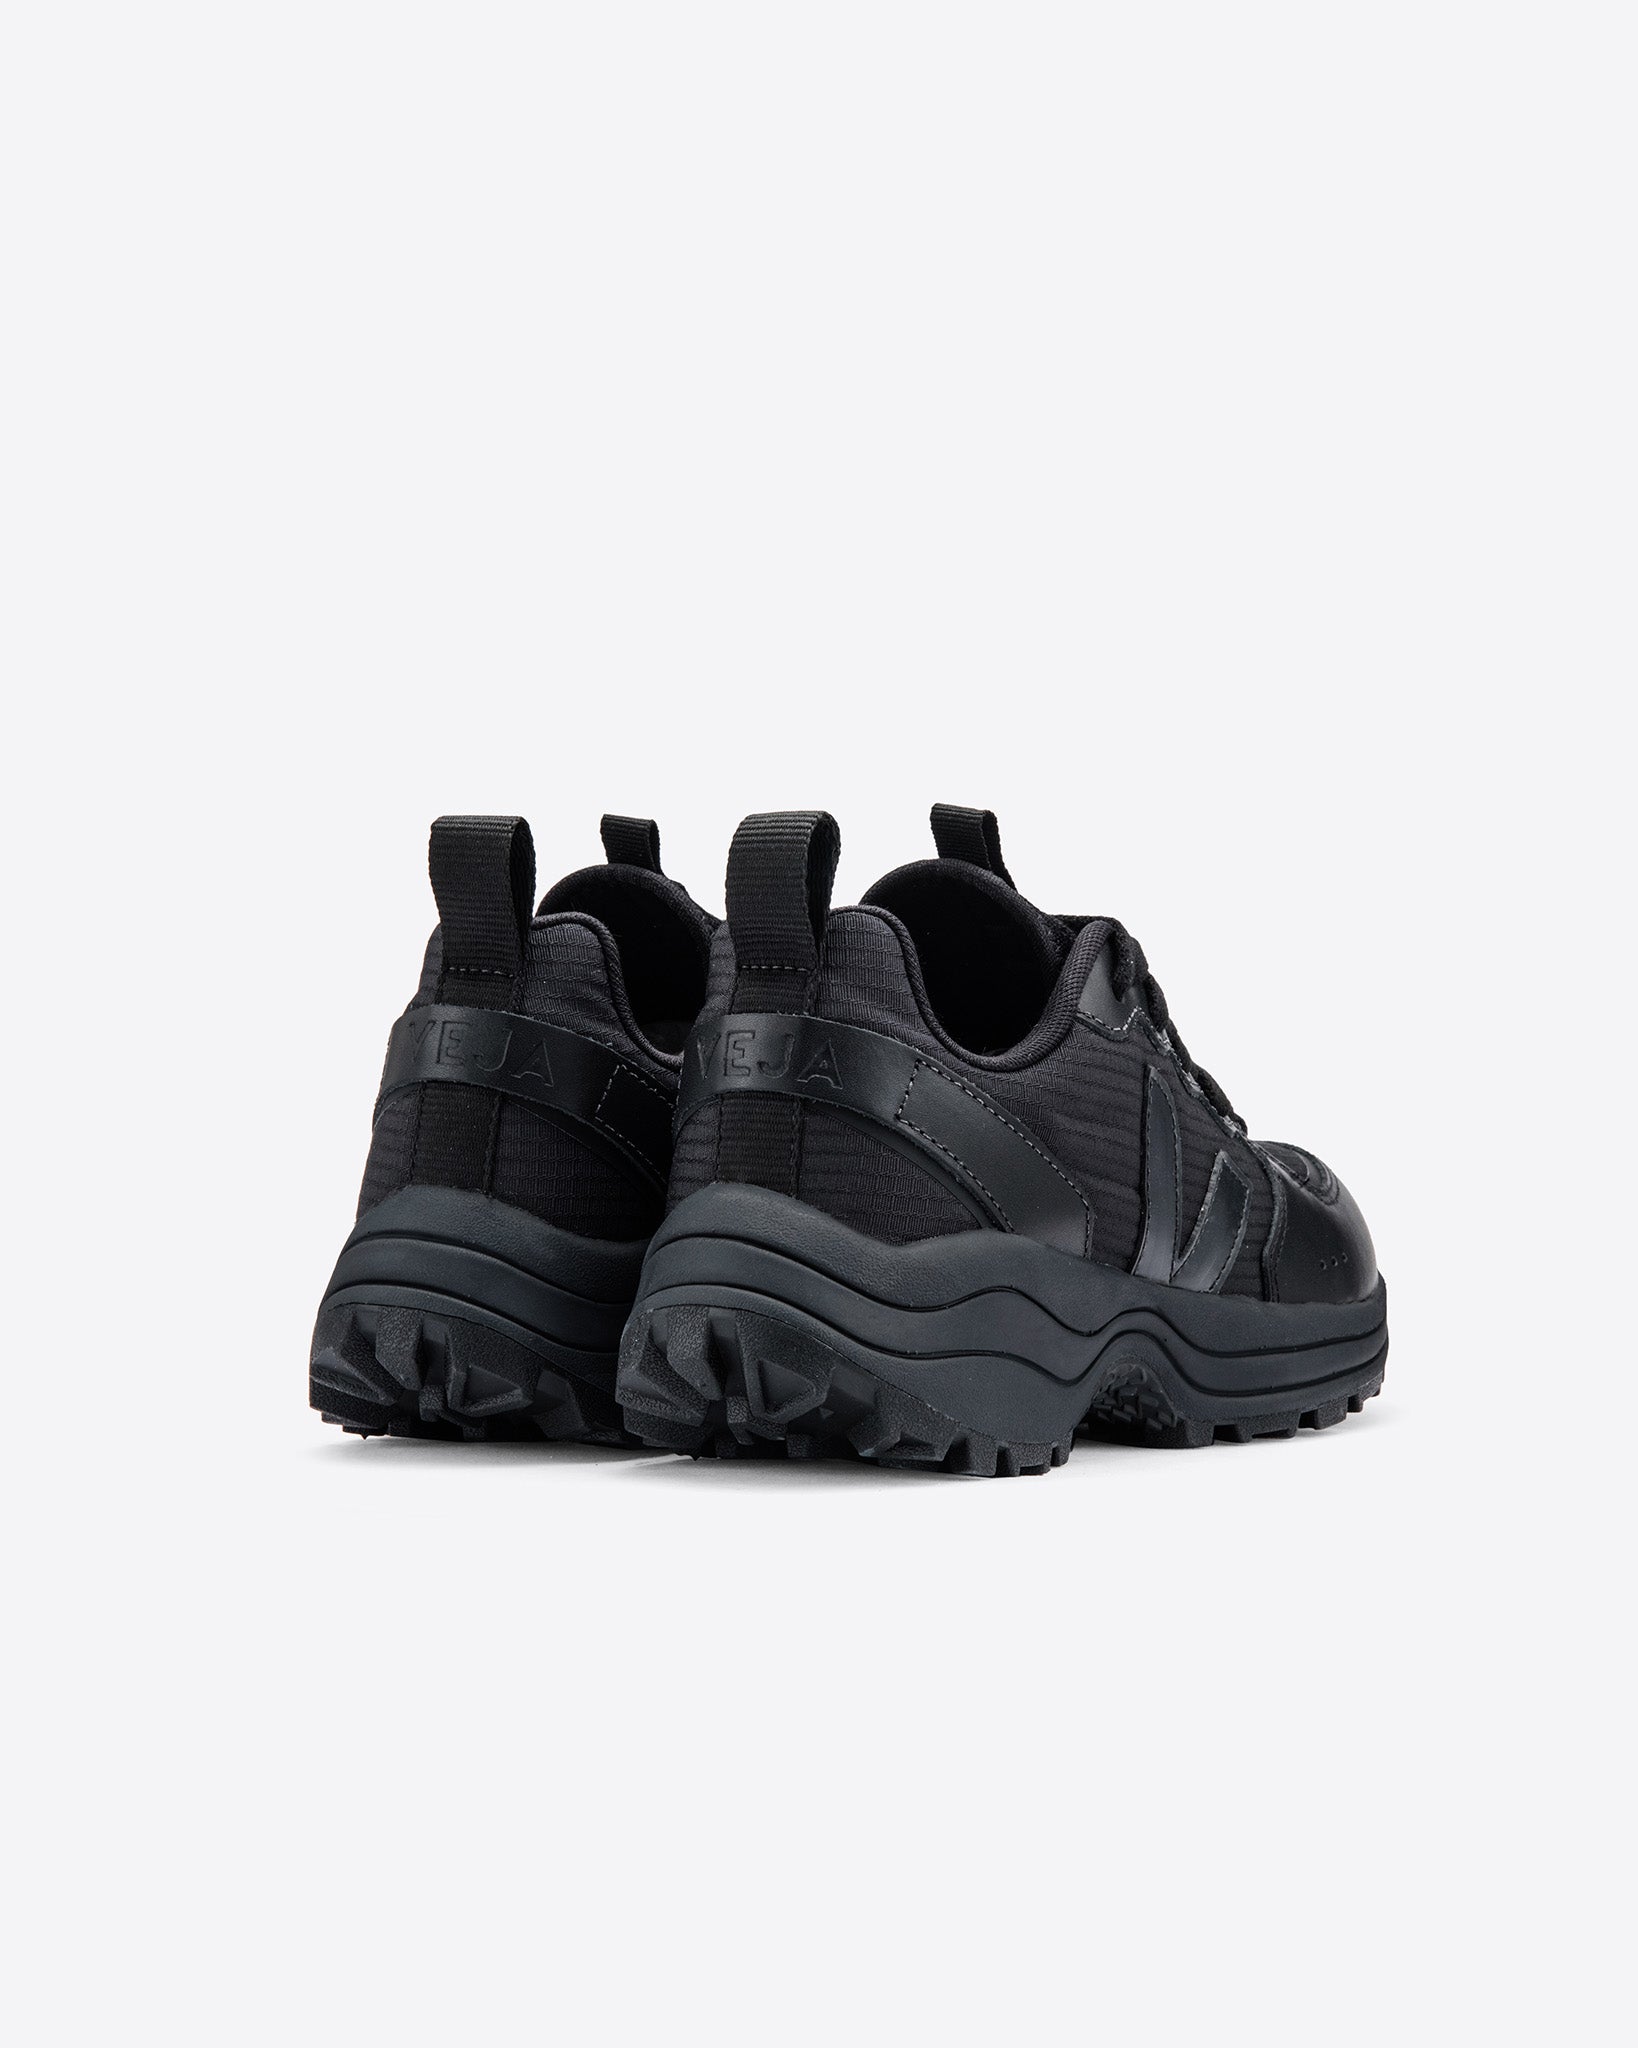 Venturi Ripstop Black Sneakers